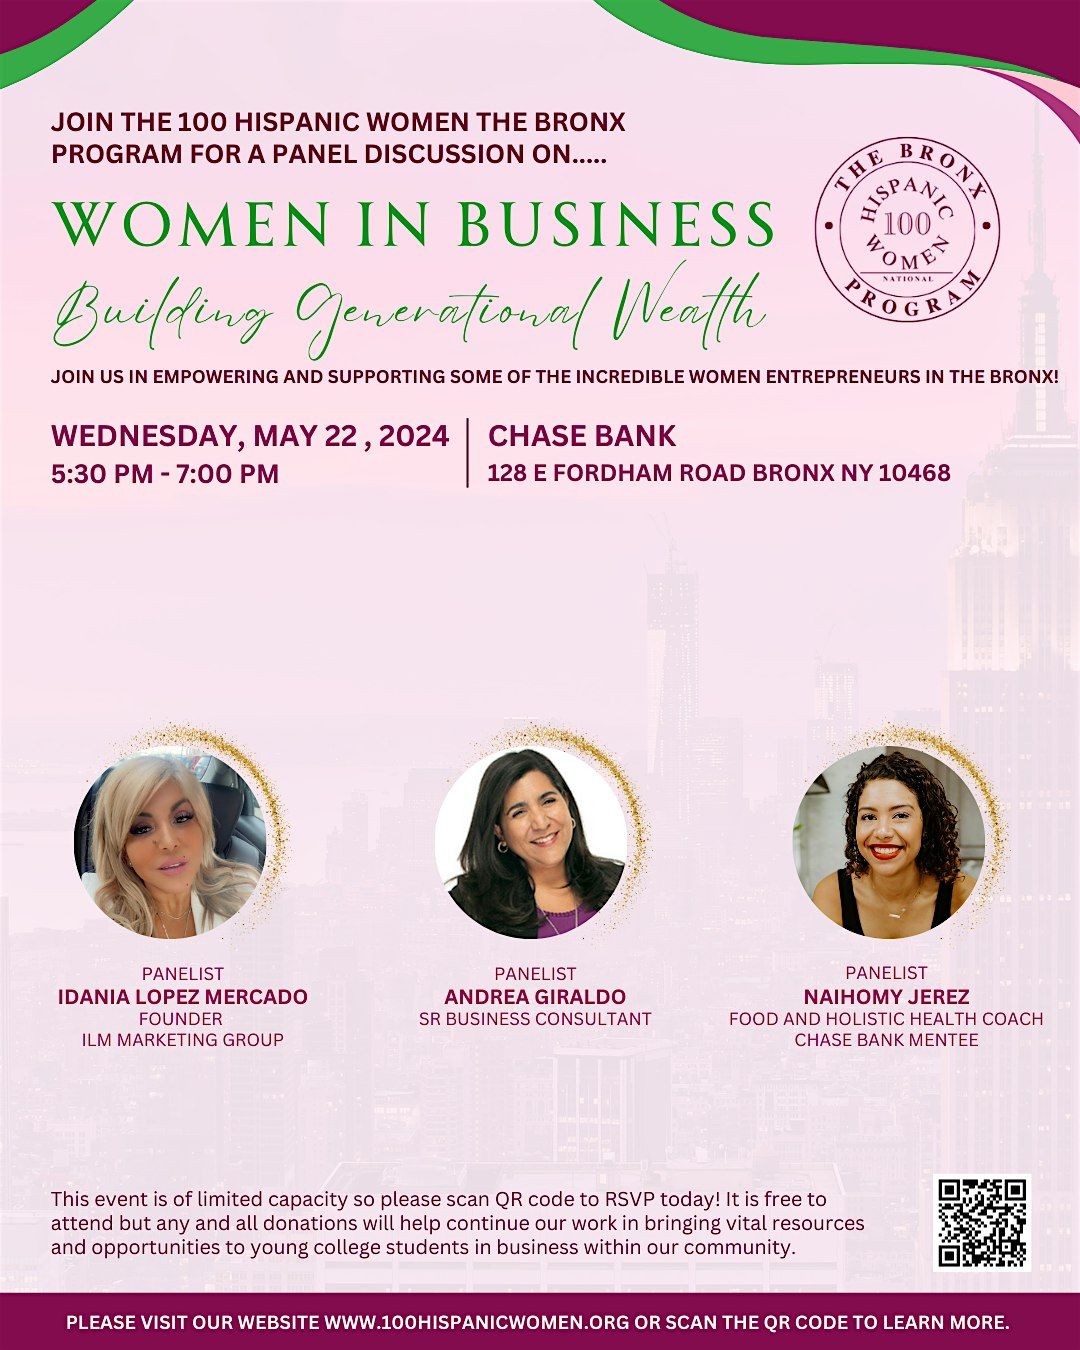 The Bronx Program of 100 HW: Women in Business Building Generational Wealth